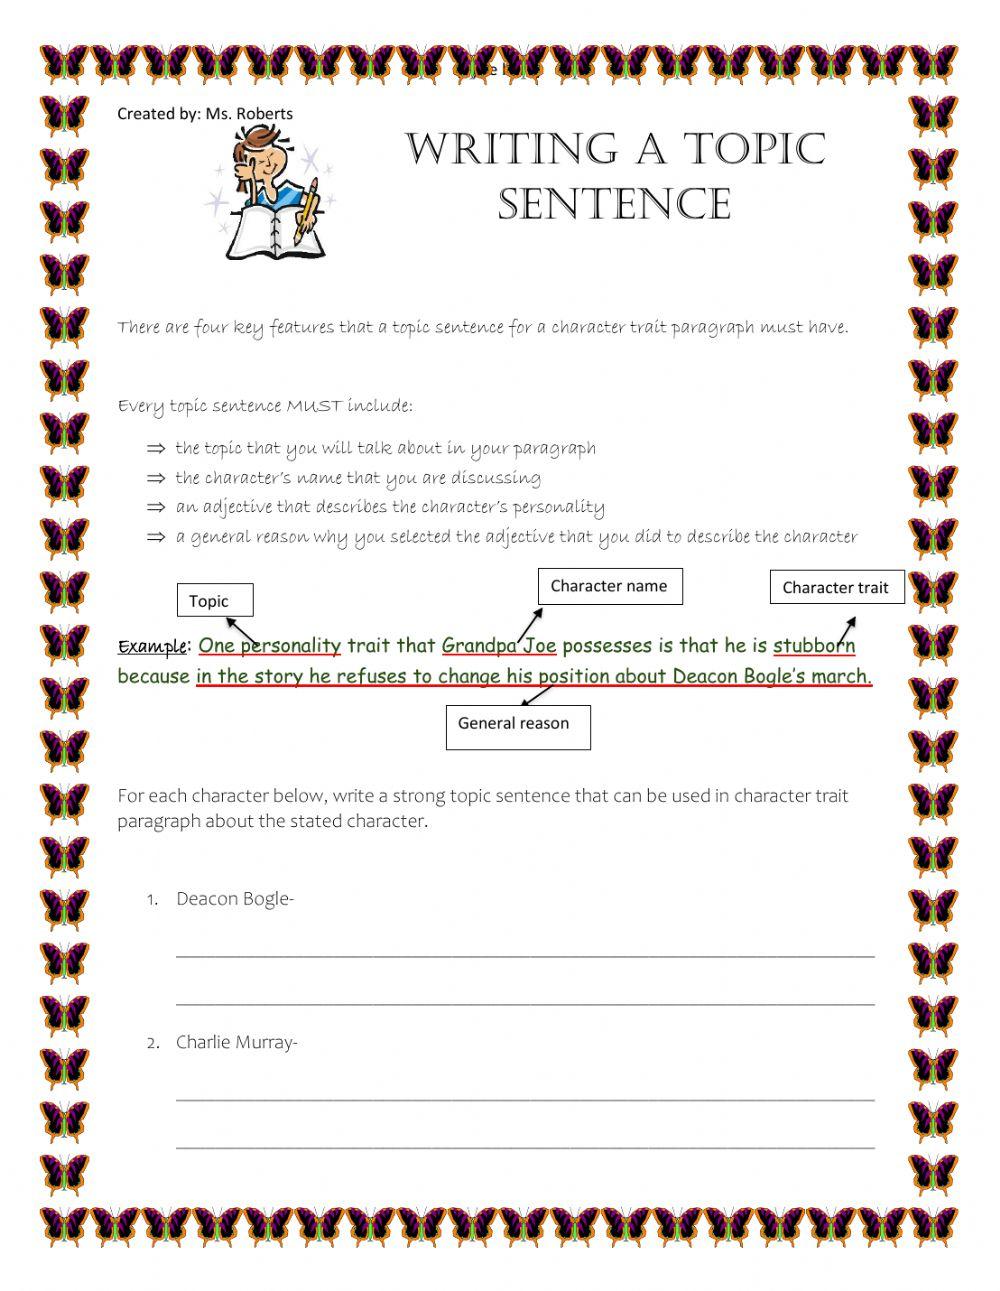 Writing Topic Sentences